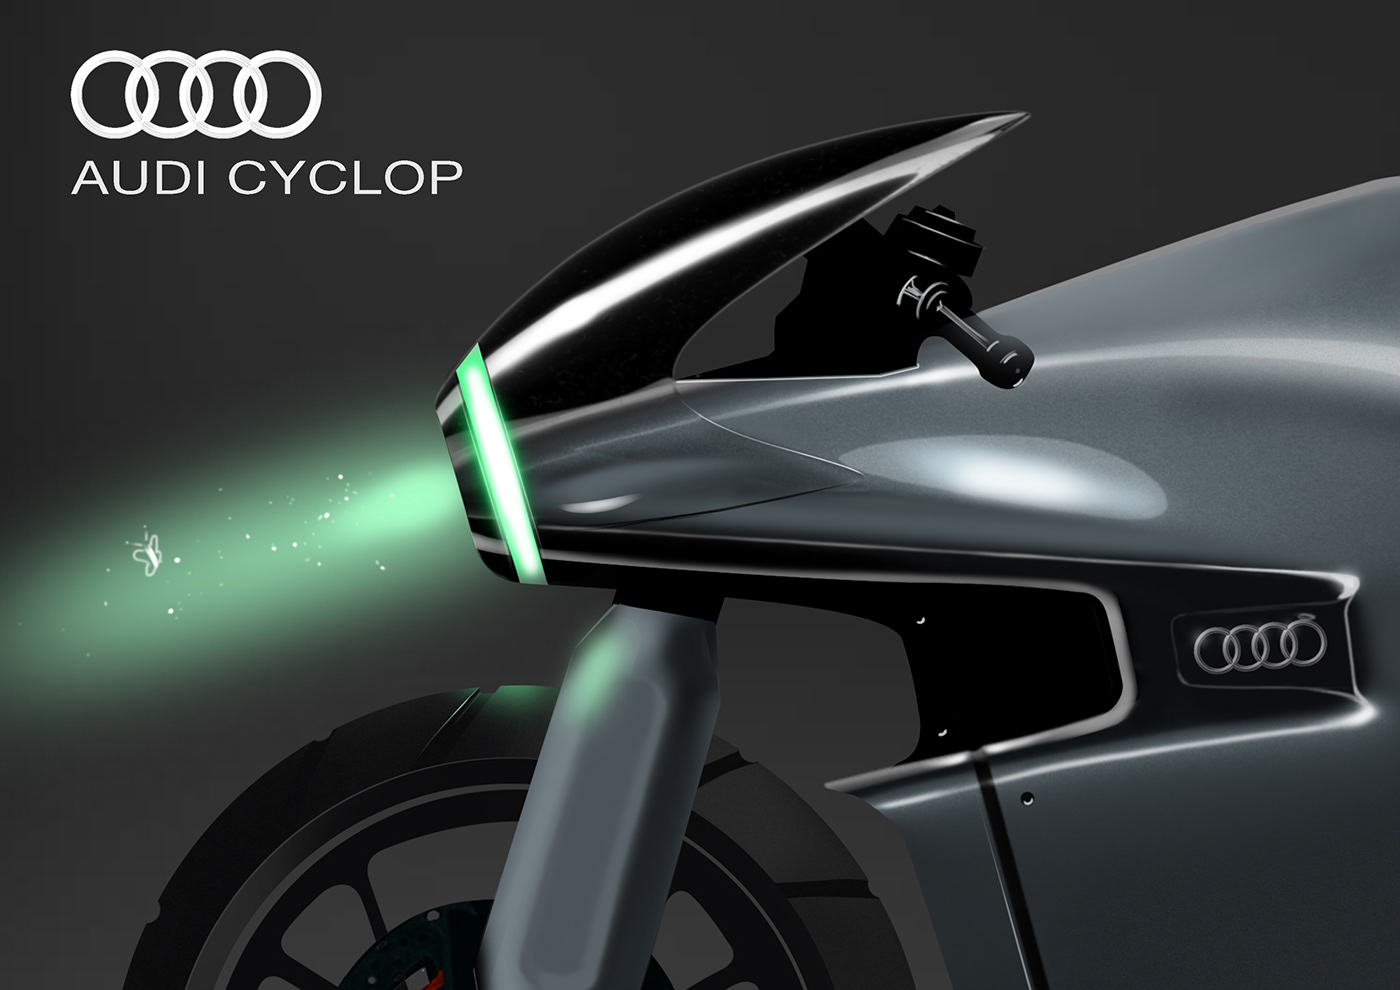 design MotorcycleDesign automotivedesign tech Audi motorcycle